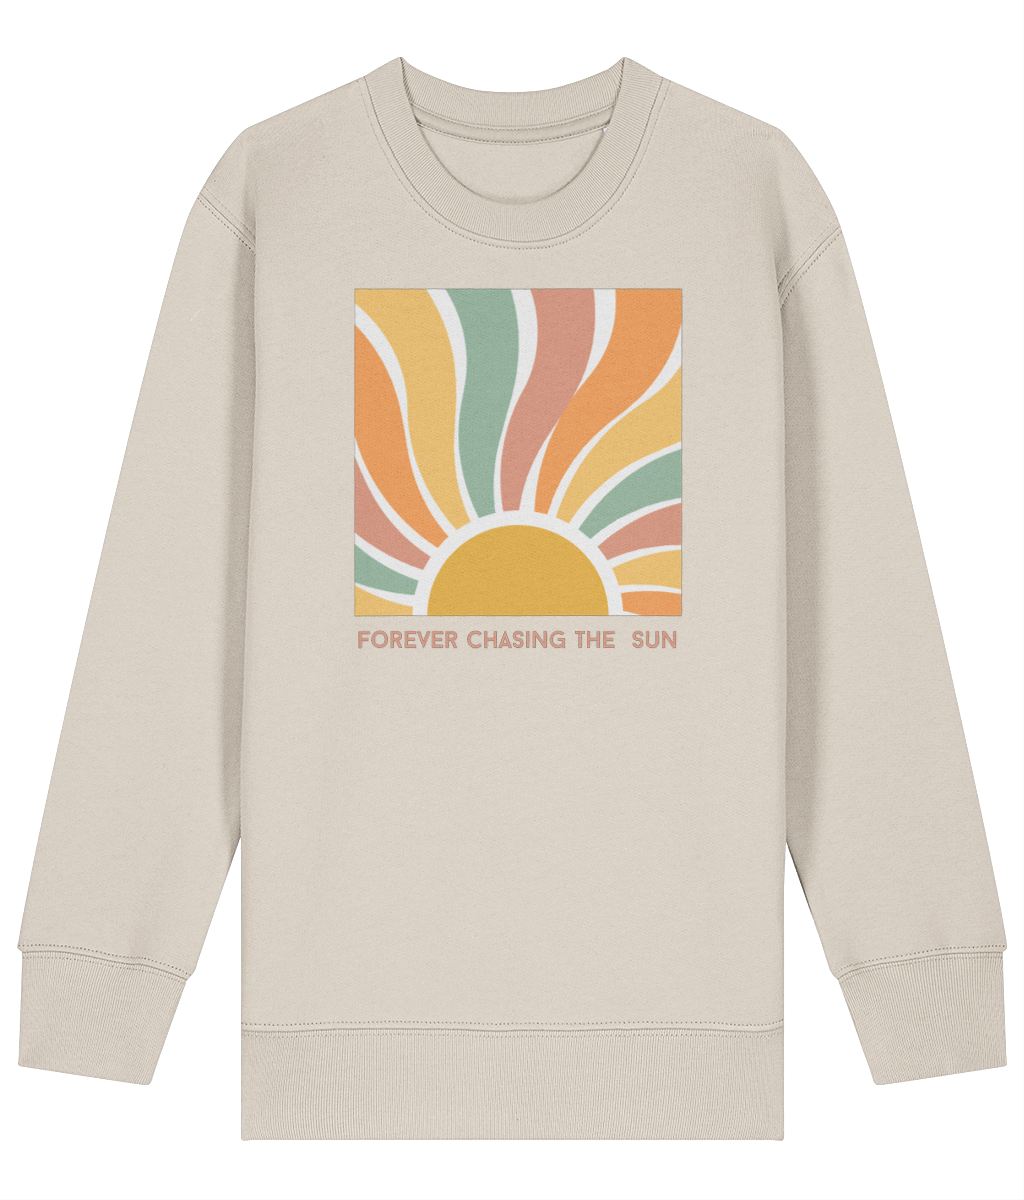 Kids unisex Sweatshirt Forever chasing the sun